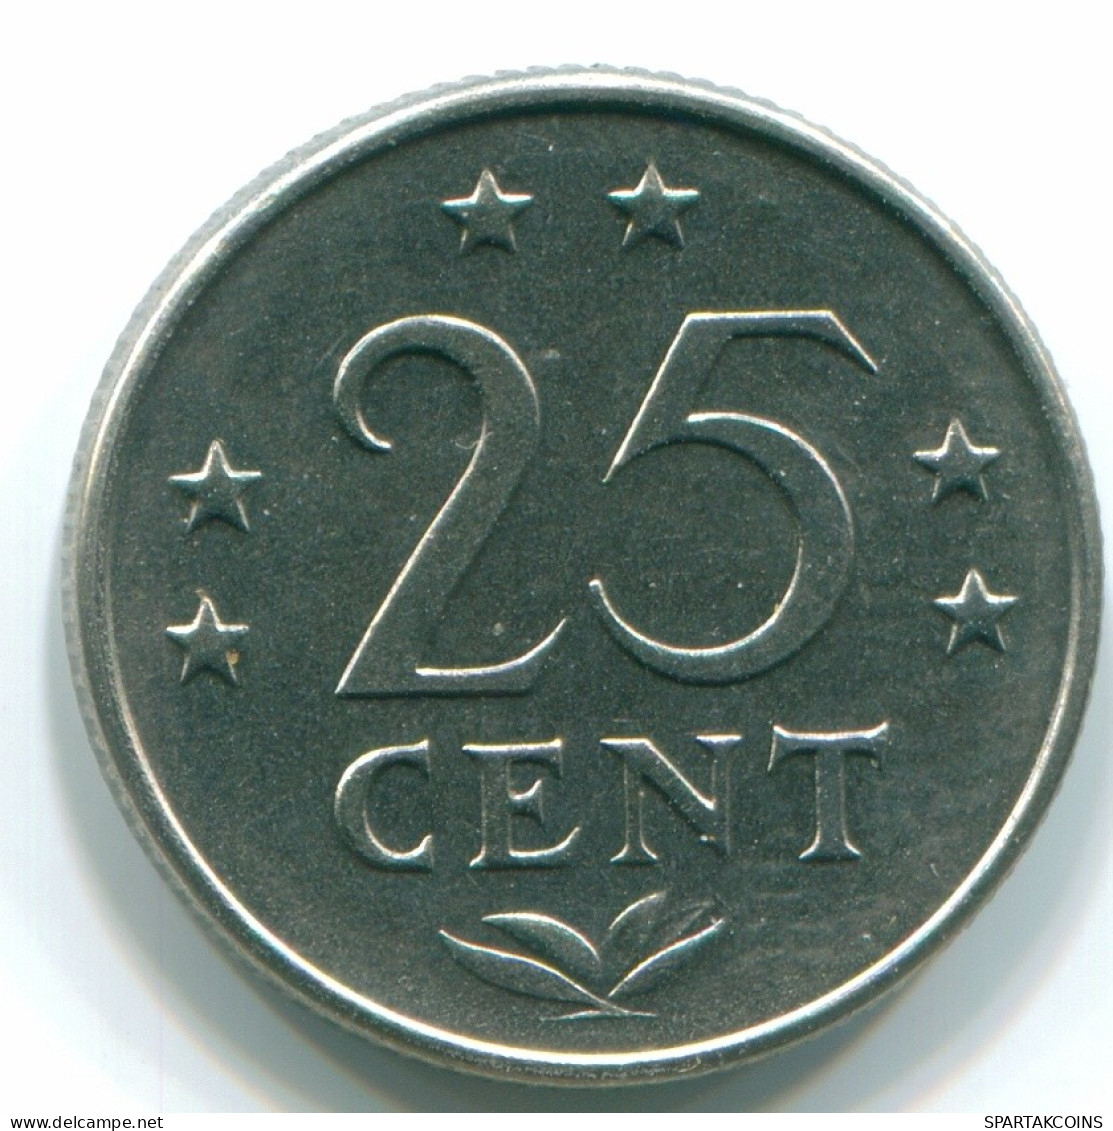 25 CENTS 1971 NIEDERLÄNDISCHE ANTILLEN Nickel Koloniale Münze #S11541.D.A - Netherlands Antilles